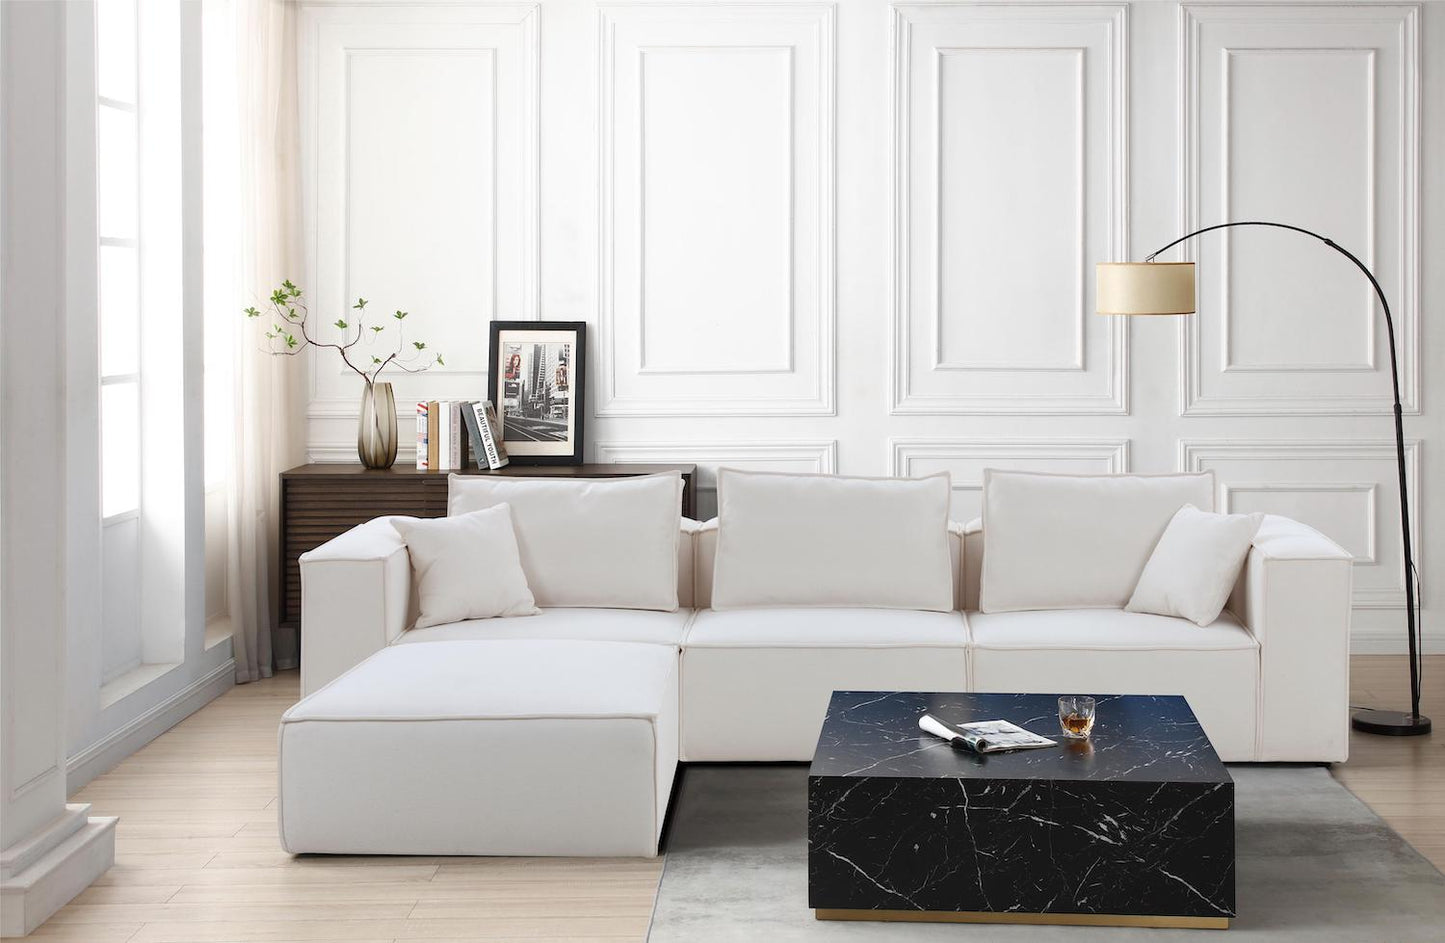 Justone Interior 4 Pc Modular Fabric Sectional Sofa - White